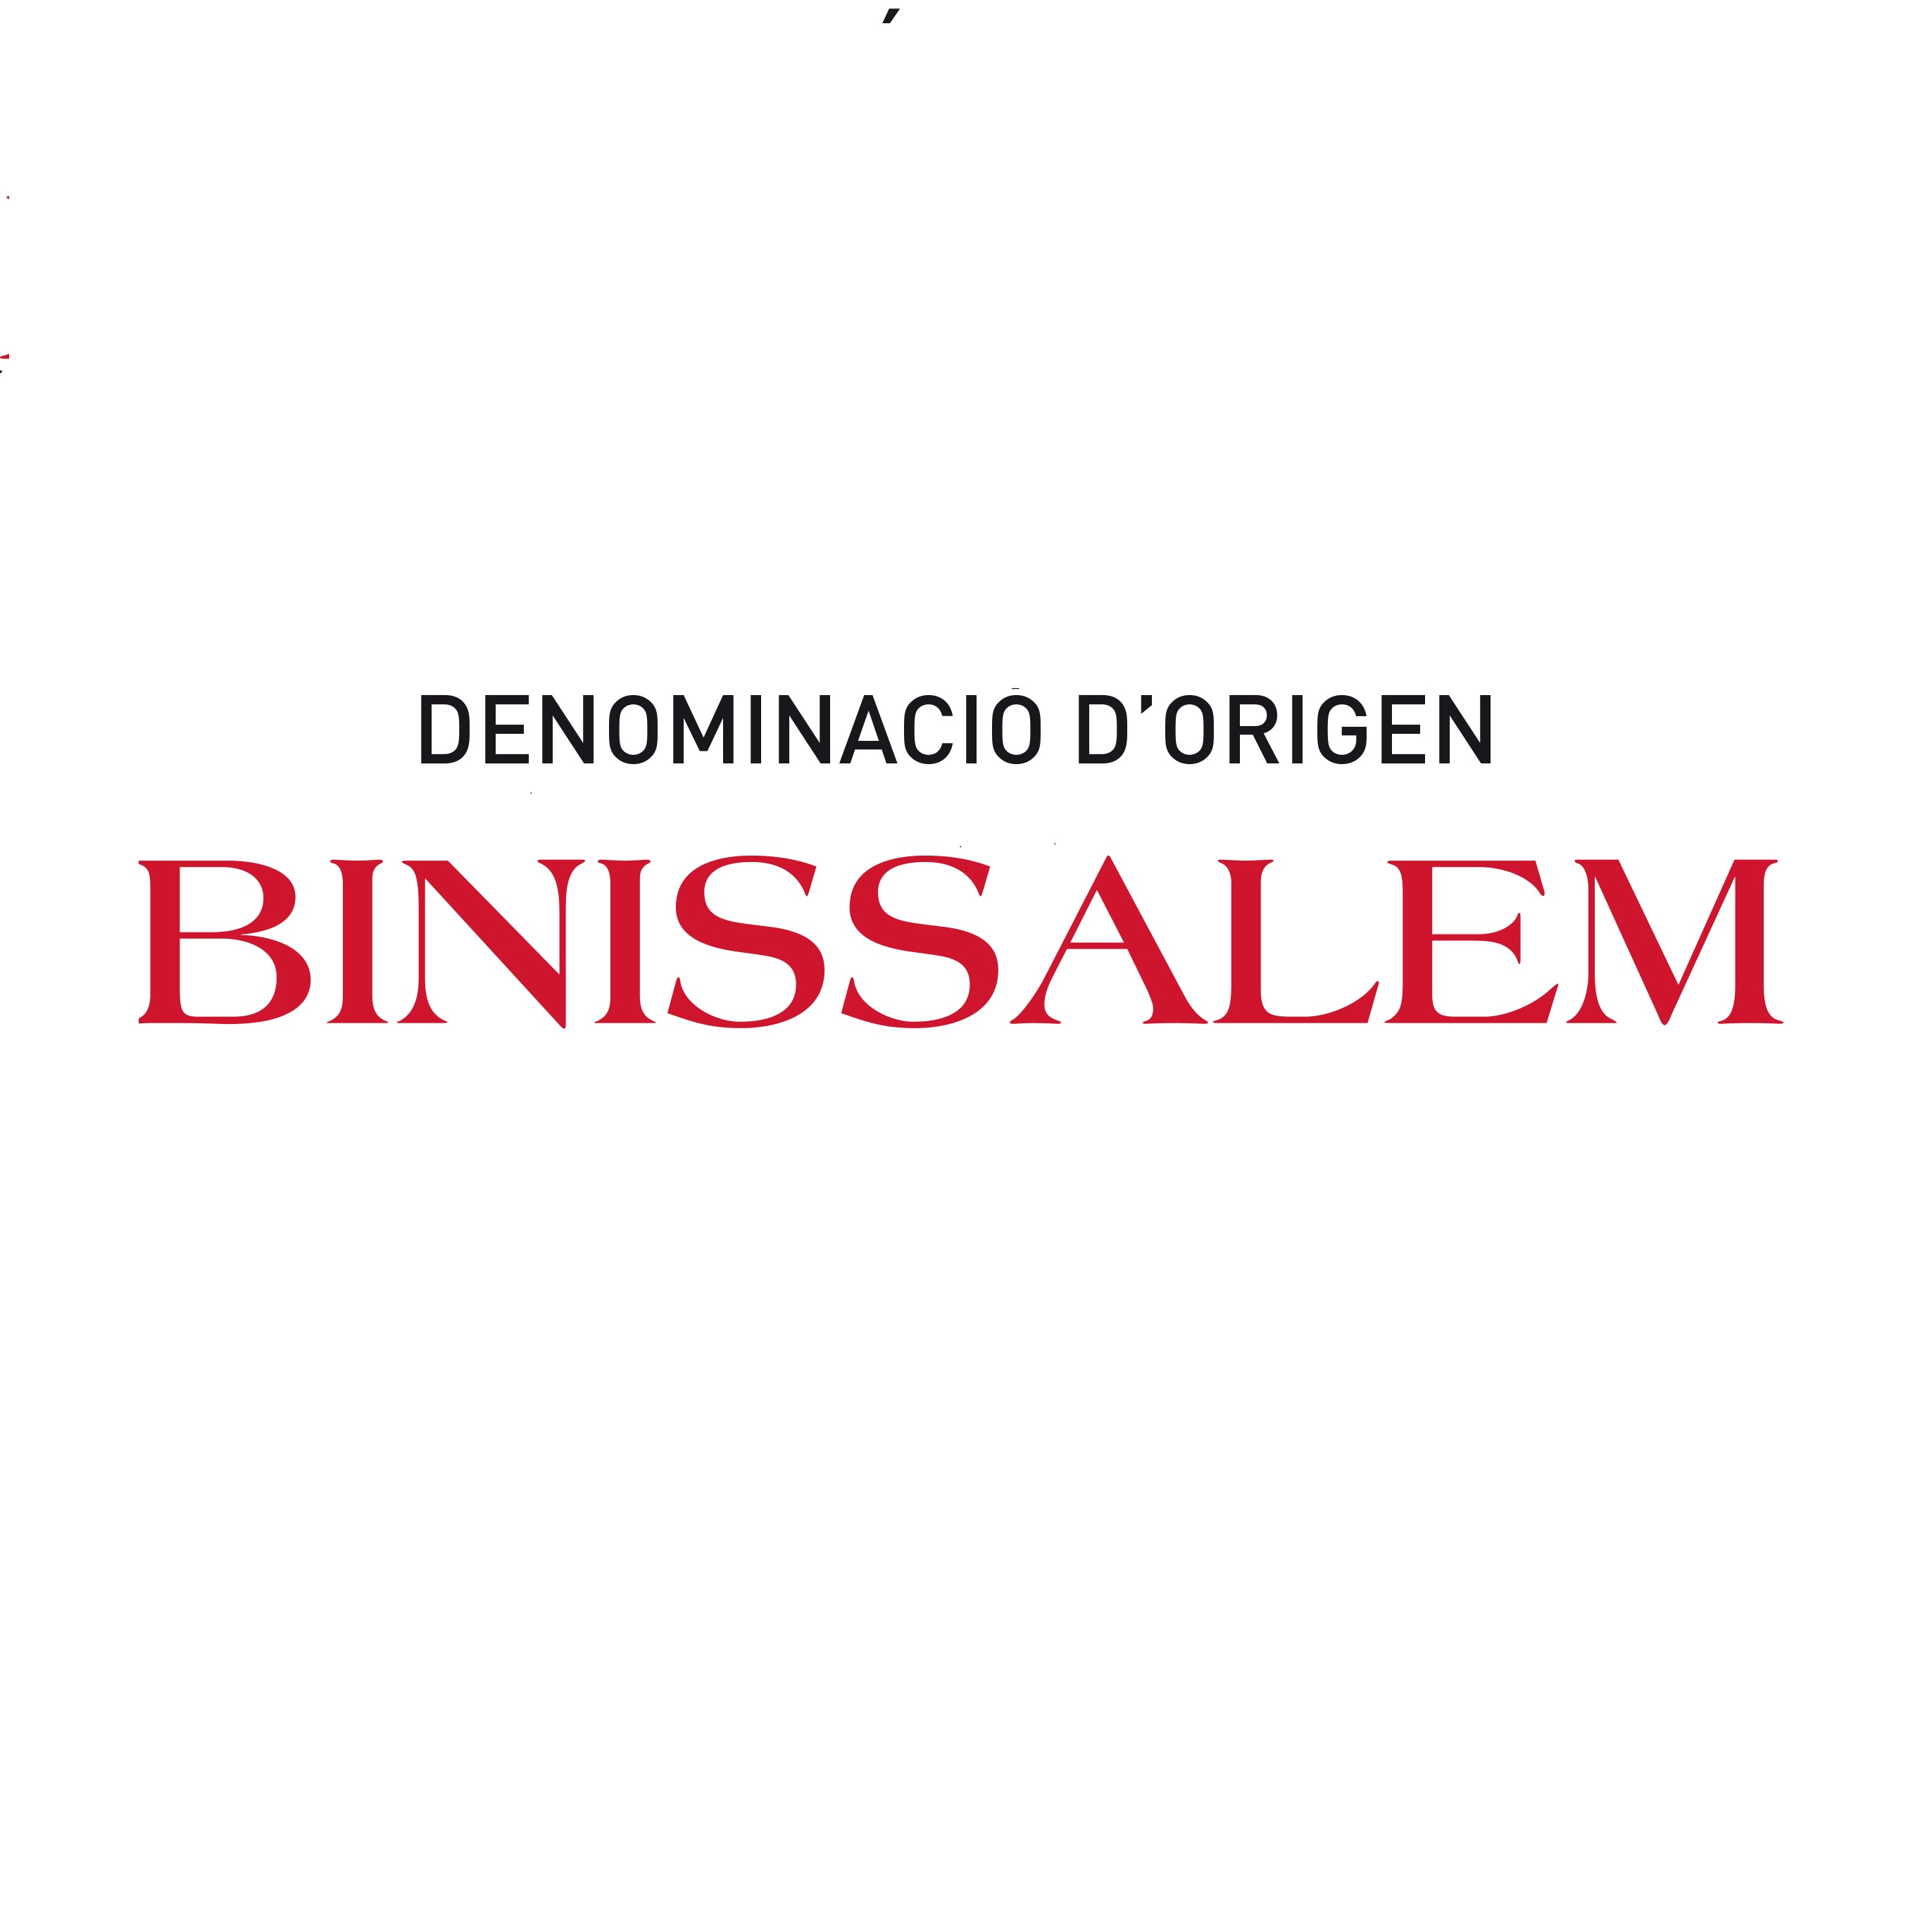 DO Binissalem - Galeria d'imatges - Illes Balears - Productes agroalimentaris, denominacions d'origen i gastronomia balear